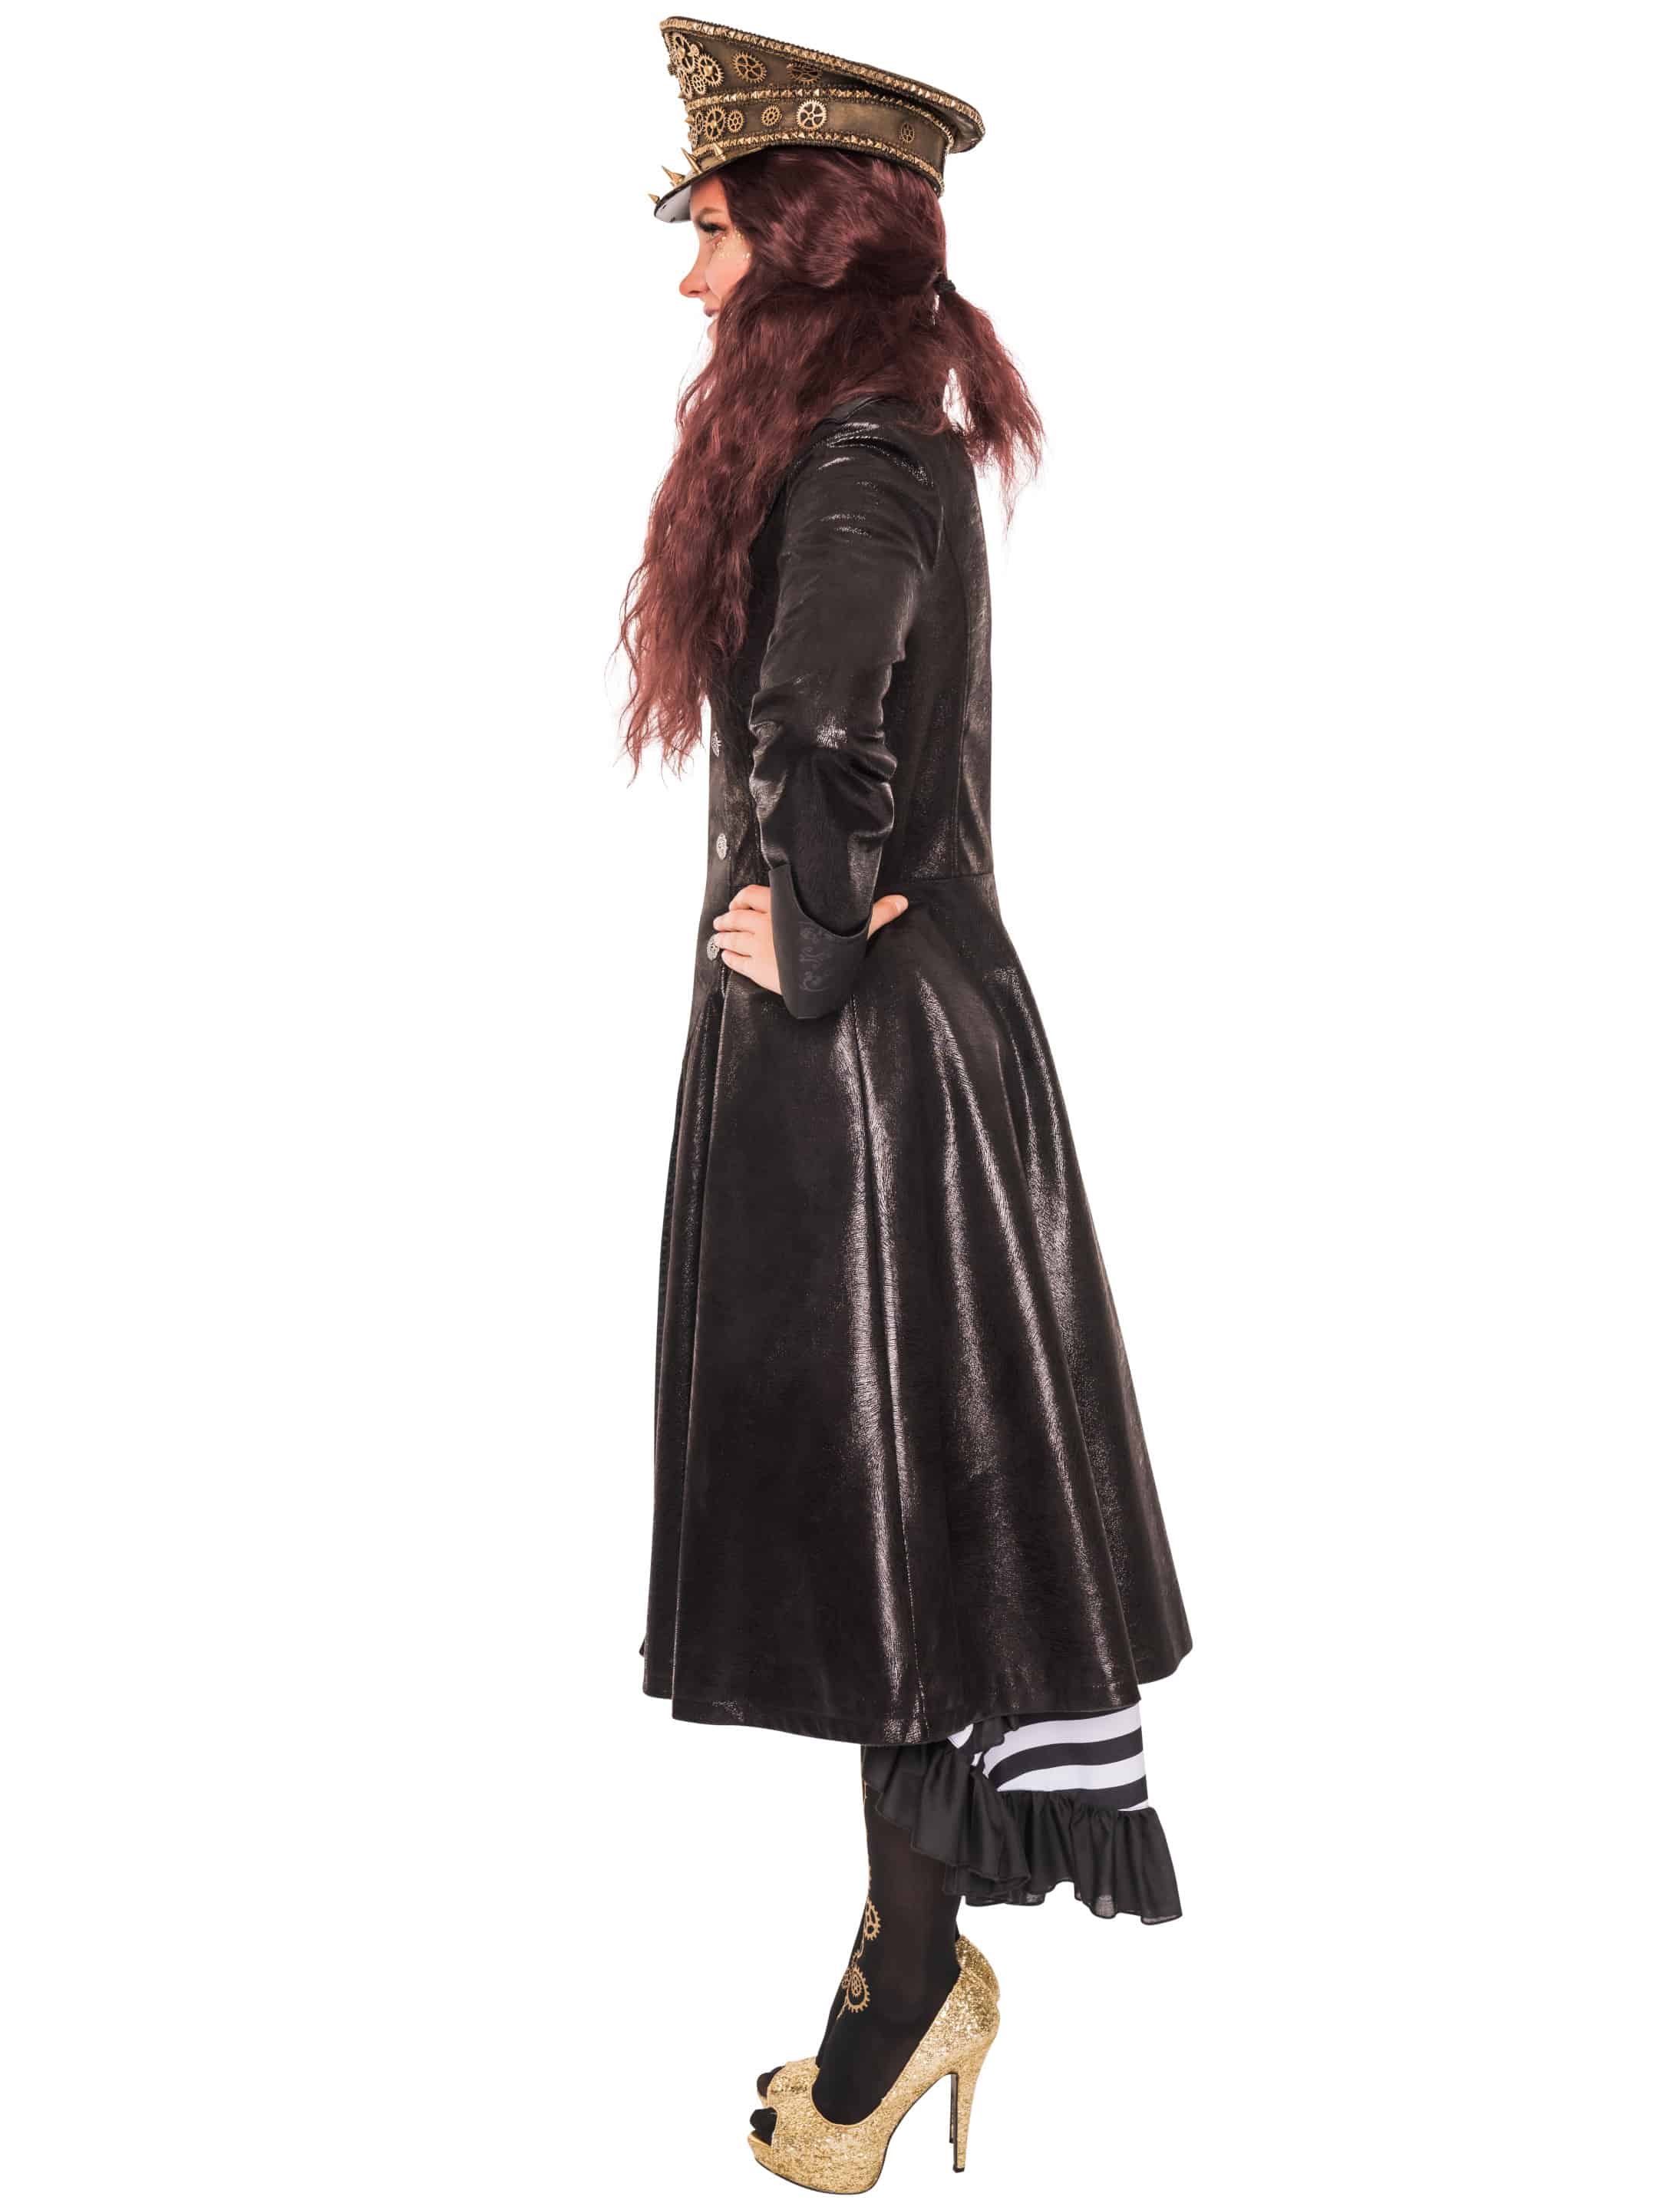 Mantel Steampunk Damen schwarz 5XL